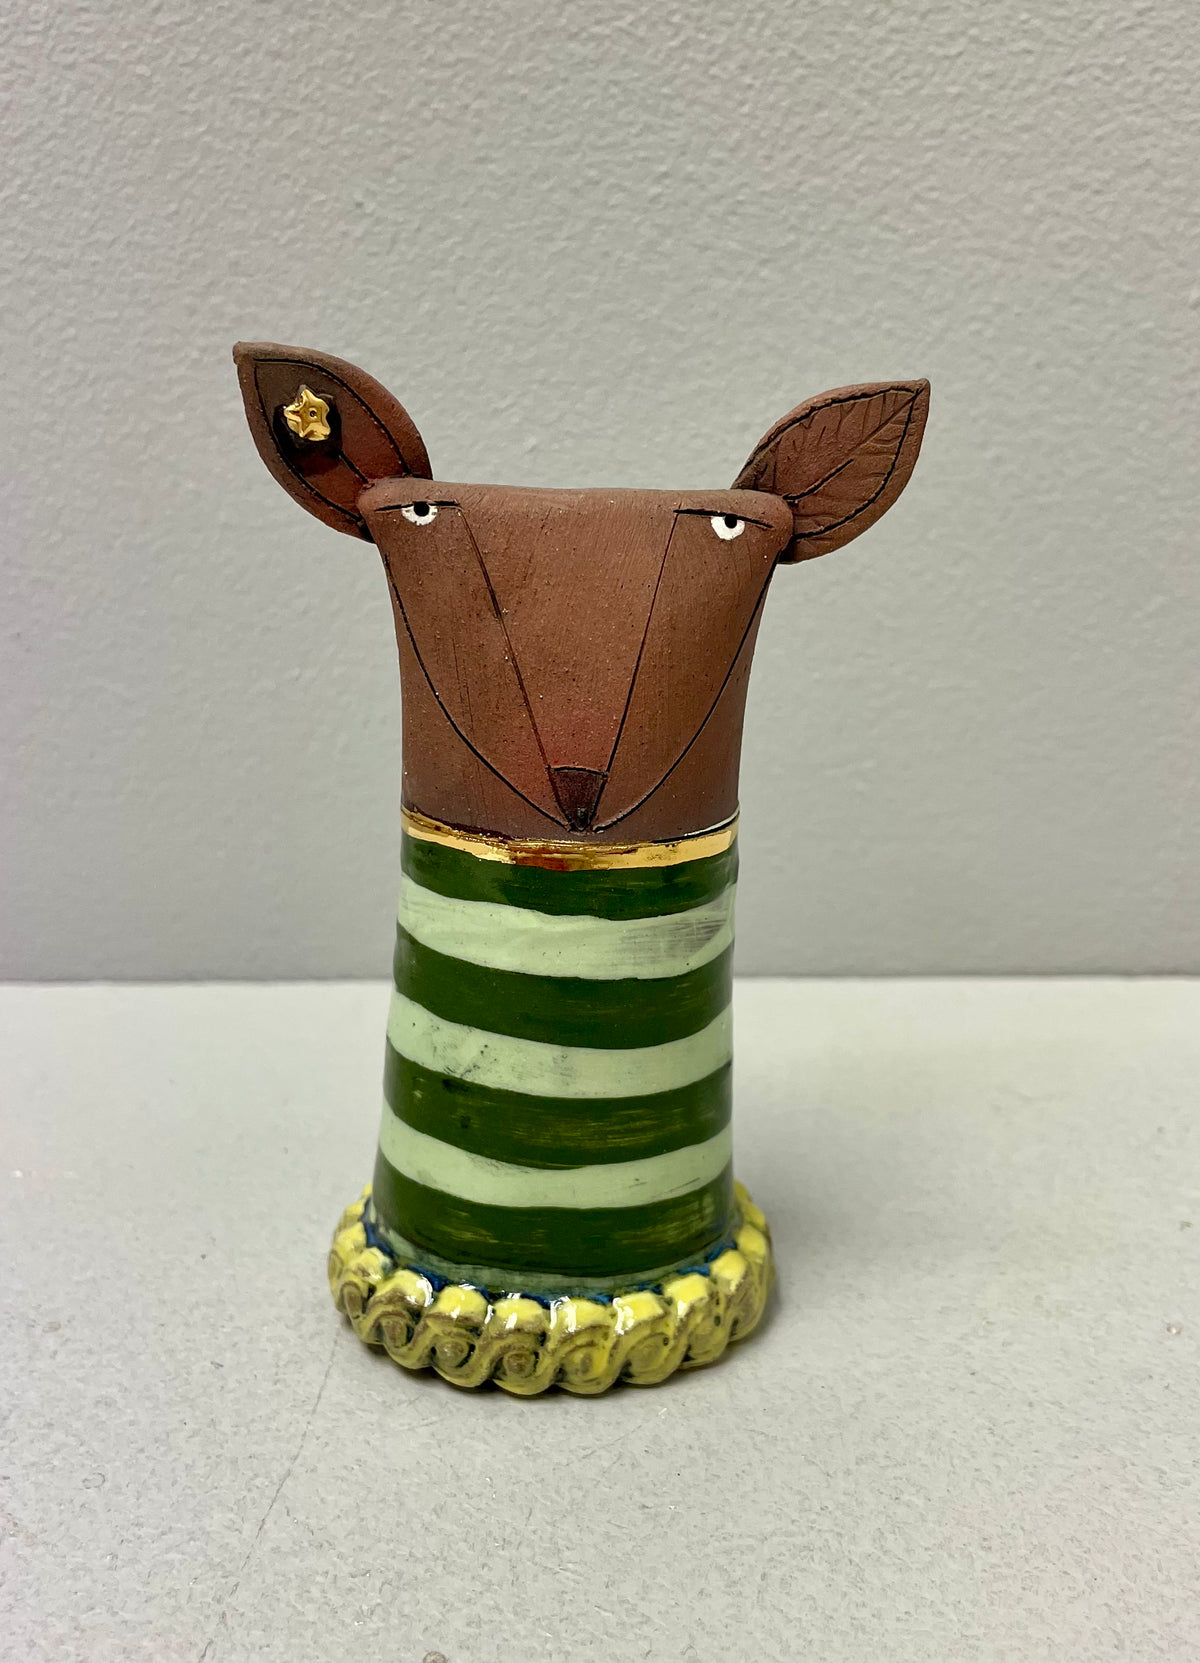 Small Dog - Ceramic Sculpture by Sarah Saunders